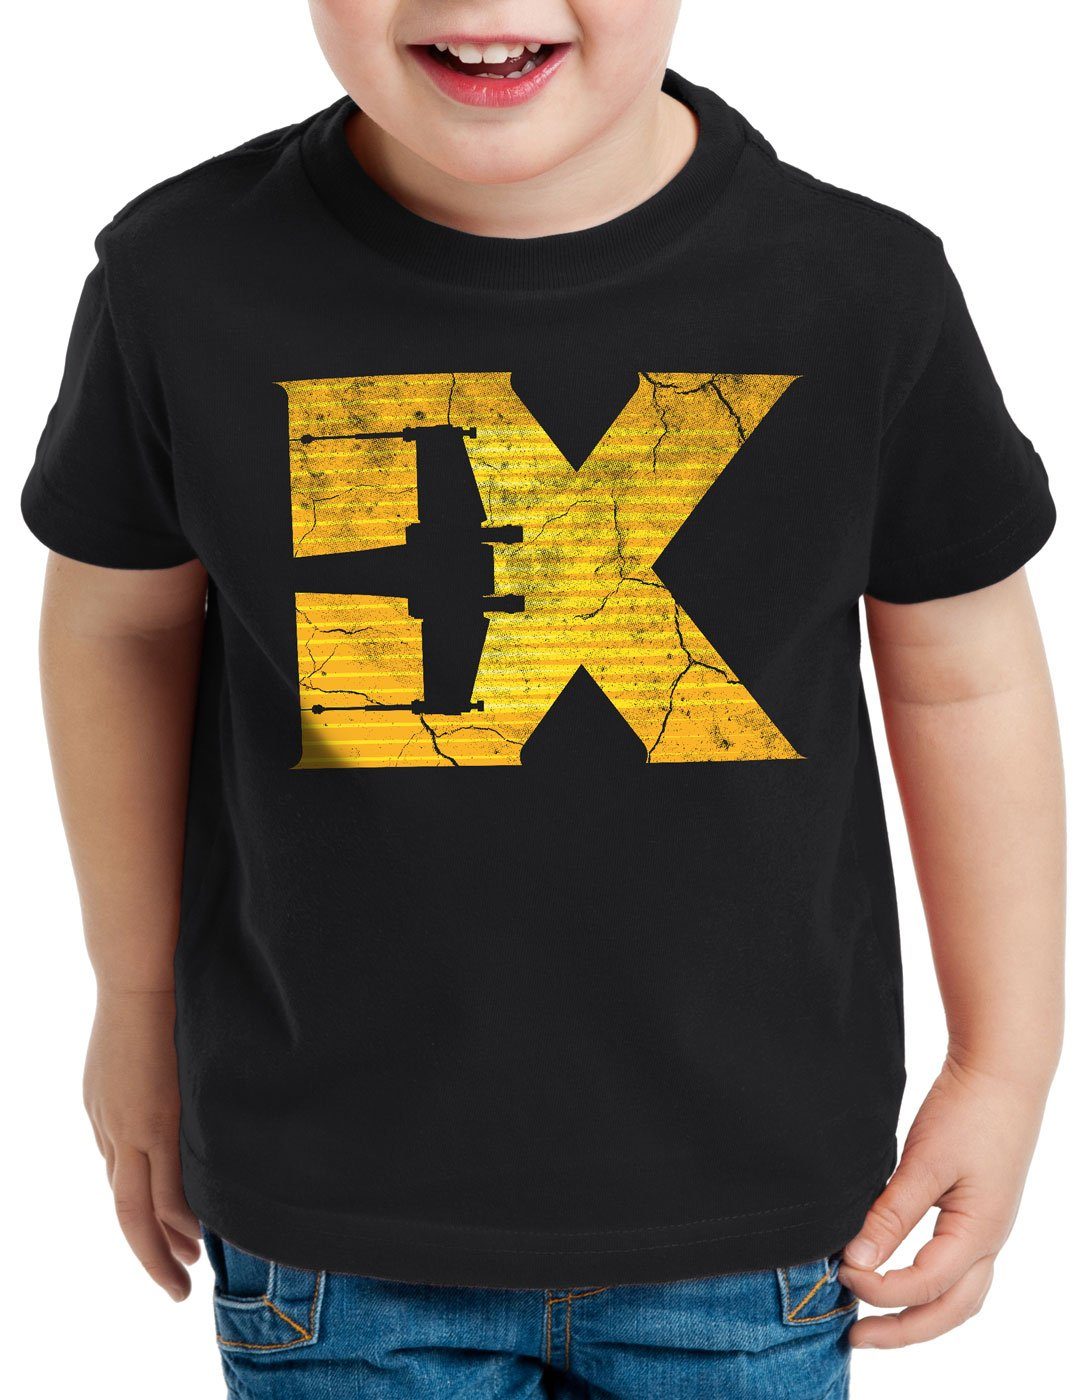 T-Shirt kinofilm Print-Shirt rebel Kinder für xwing style3 IX 9 Episode T-Shirt